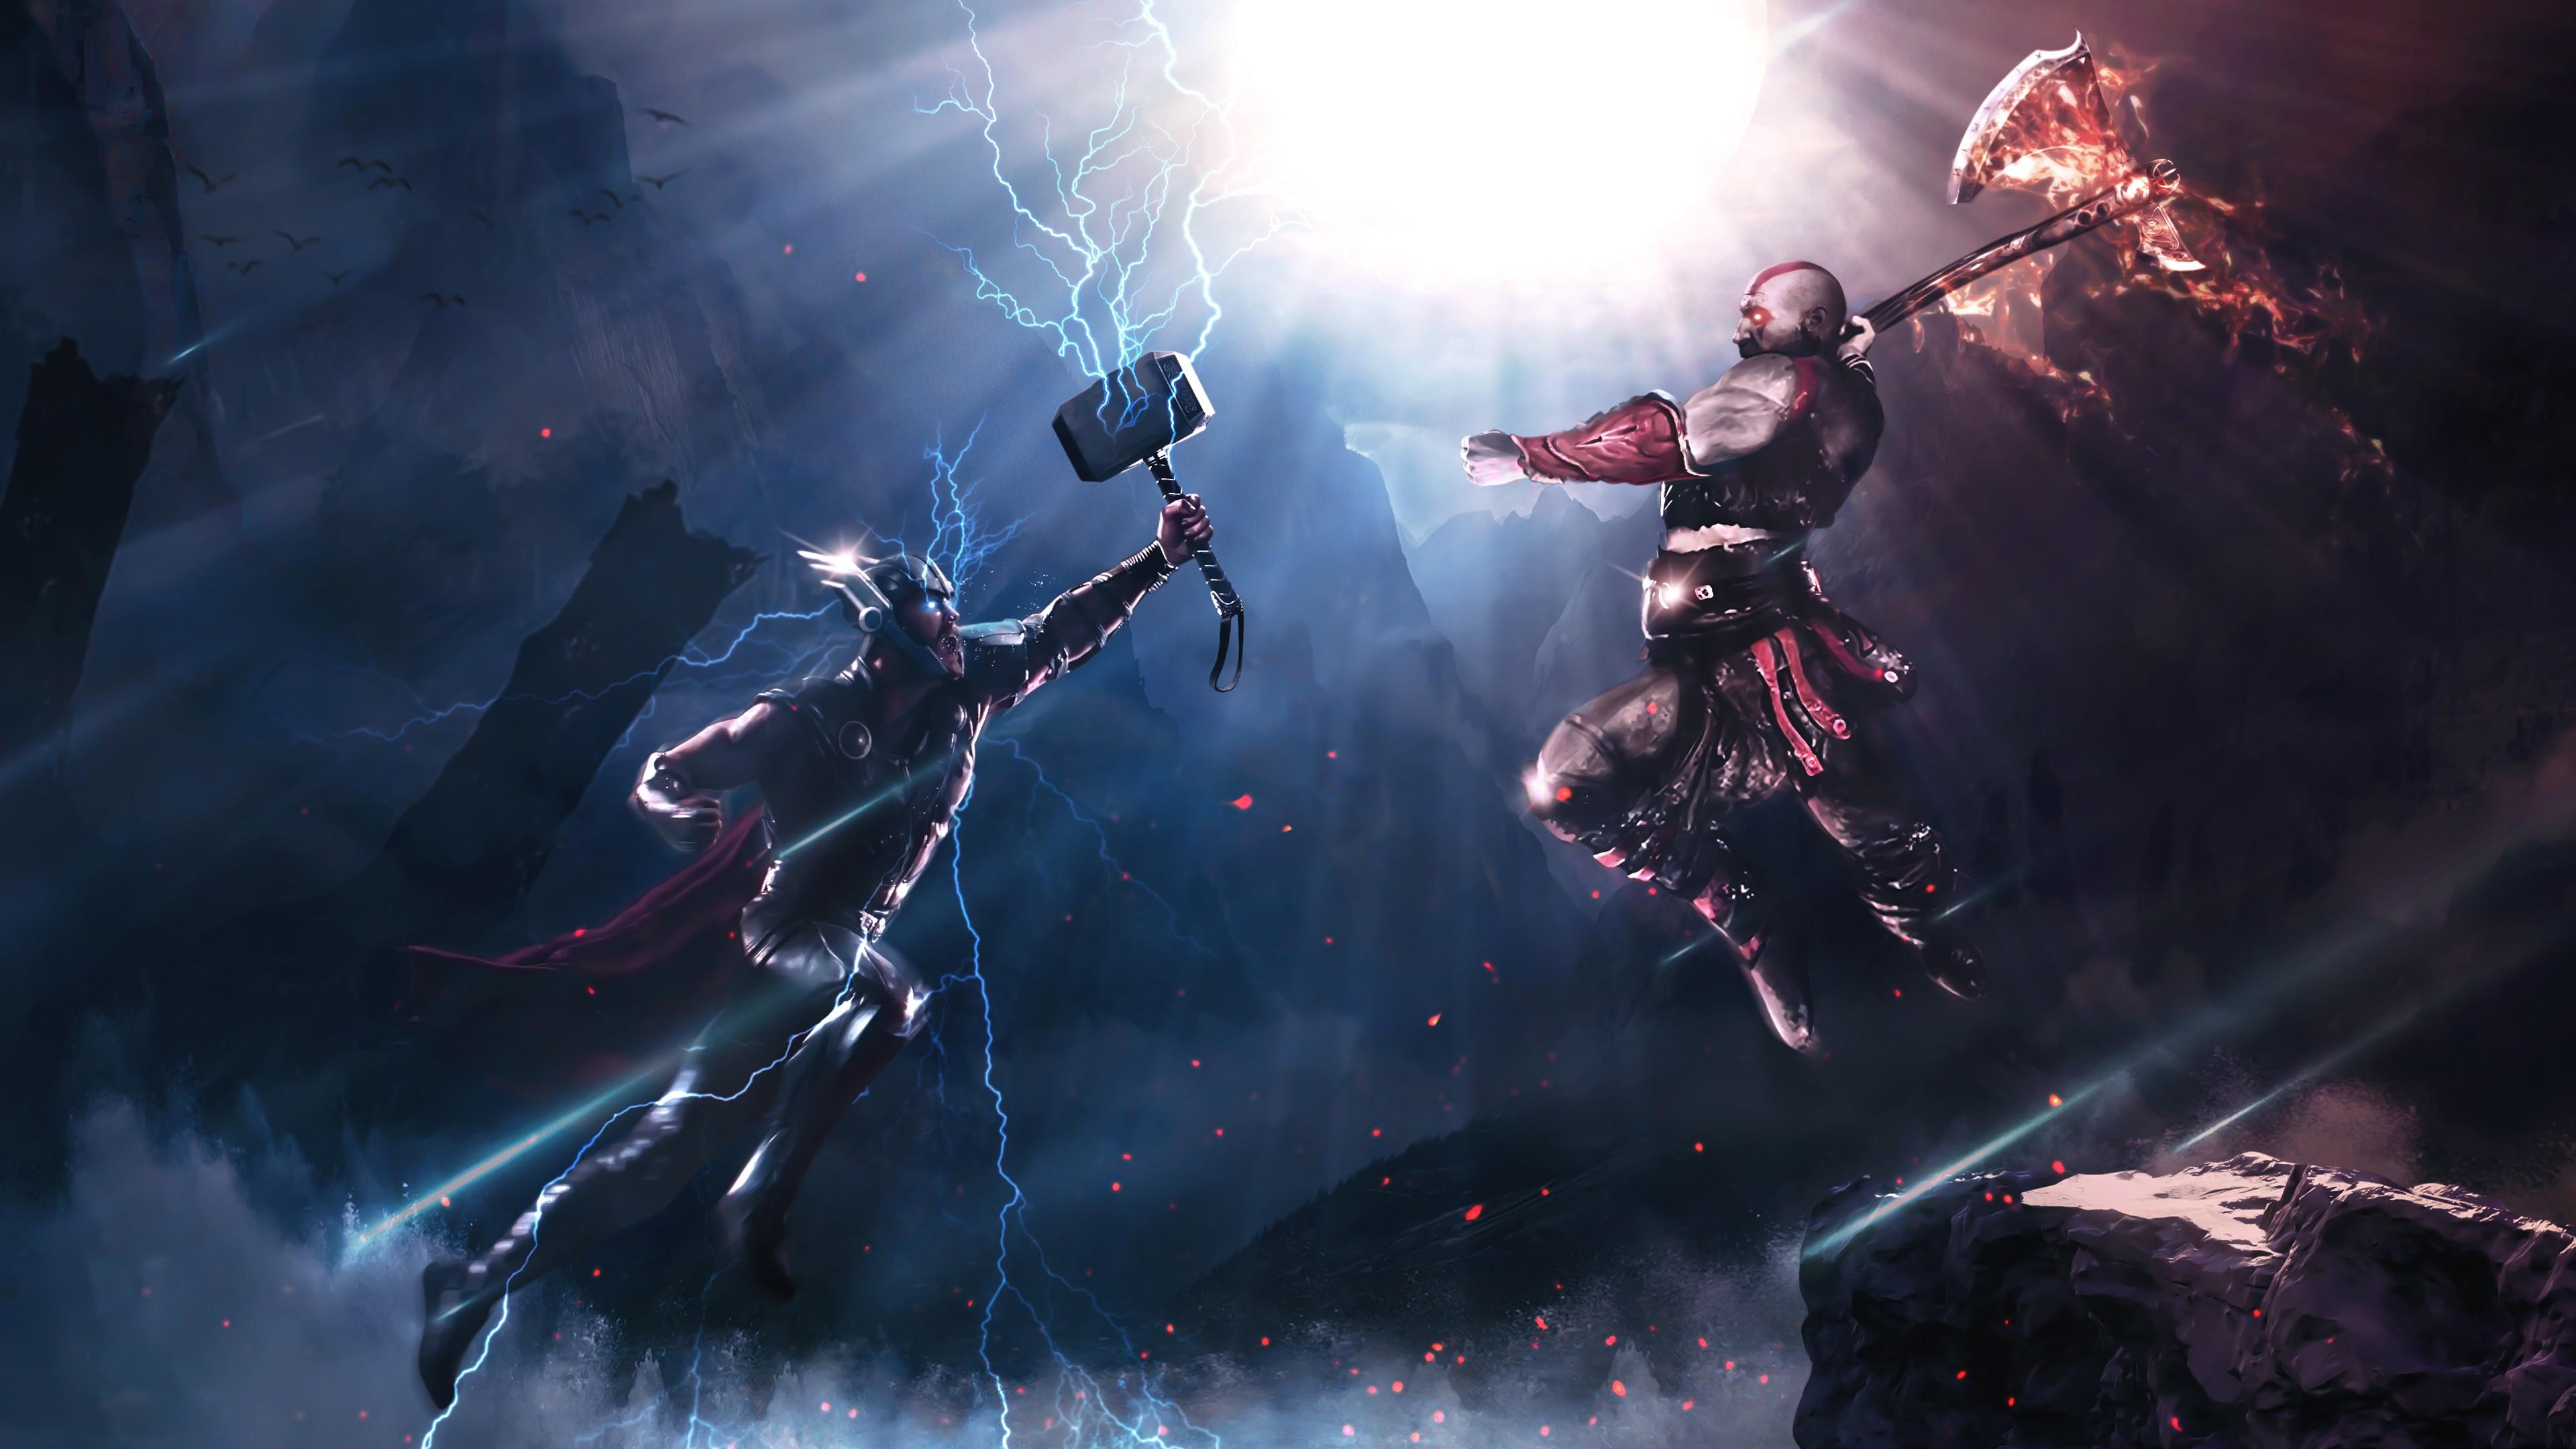 Thor VS Kratos 4k Ultra HD Wallpaper. Background Image